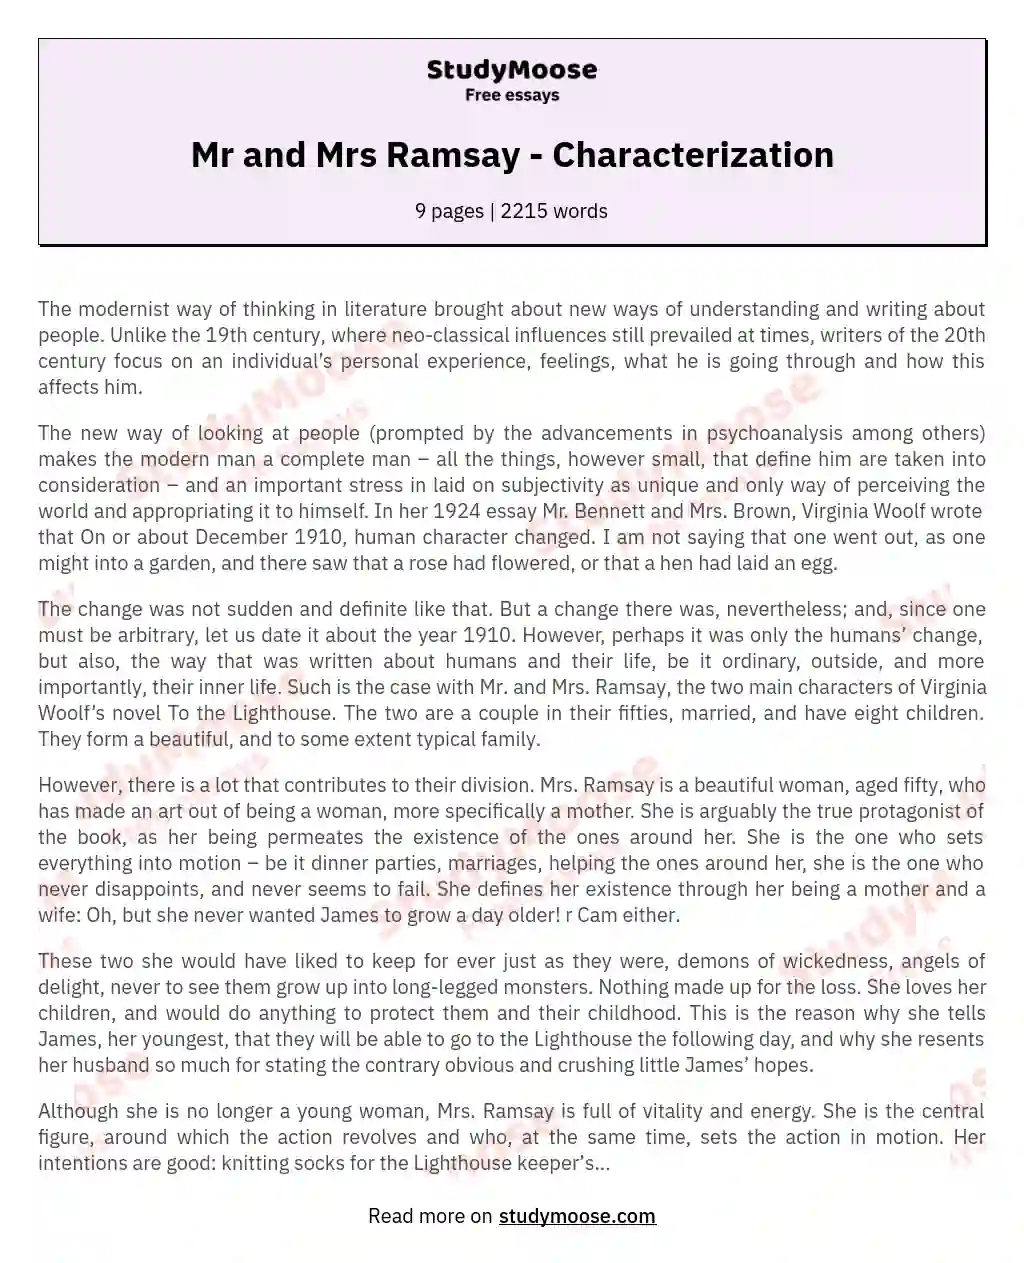 Mr and Mrs Ramsay - Characterization essay